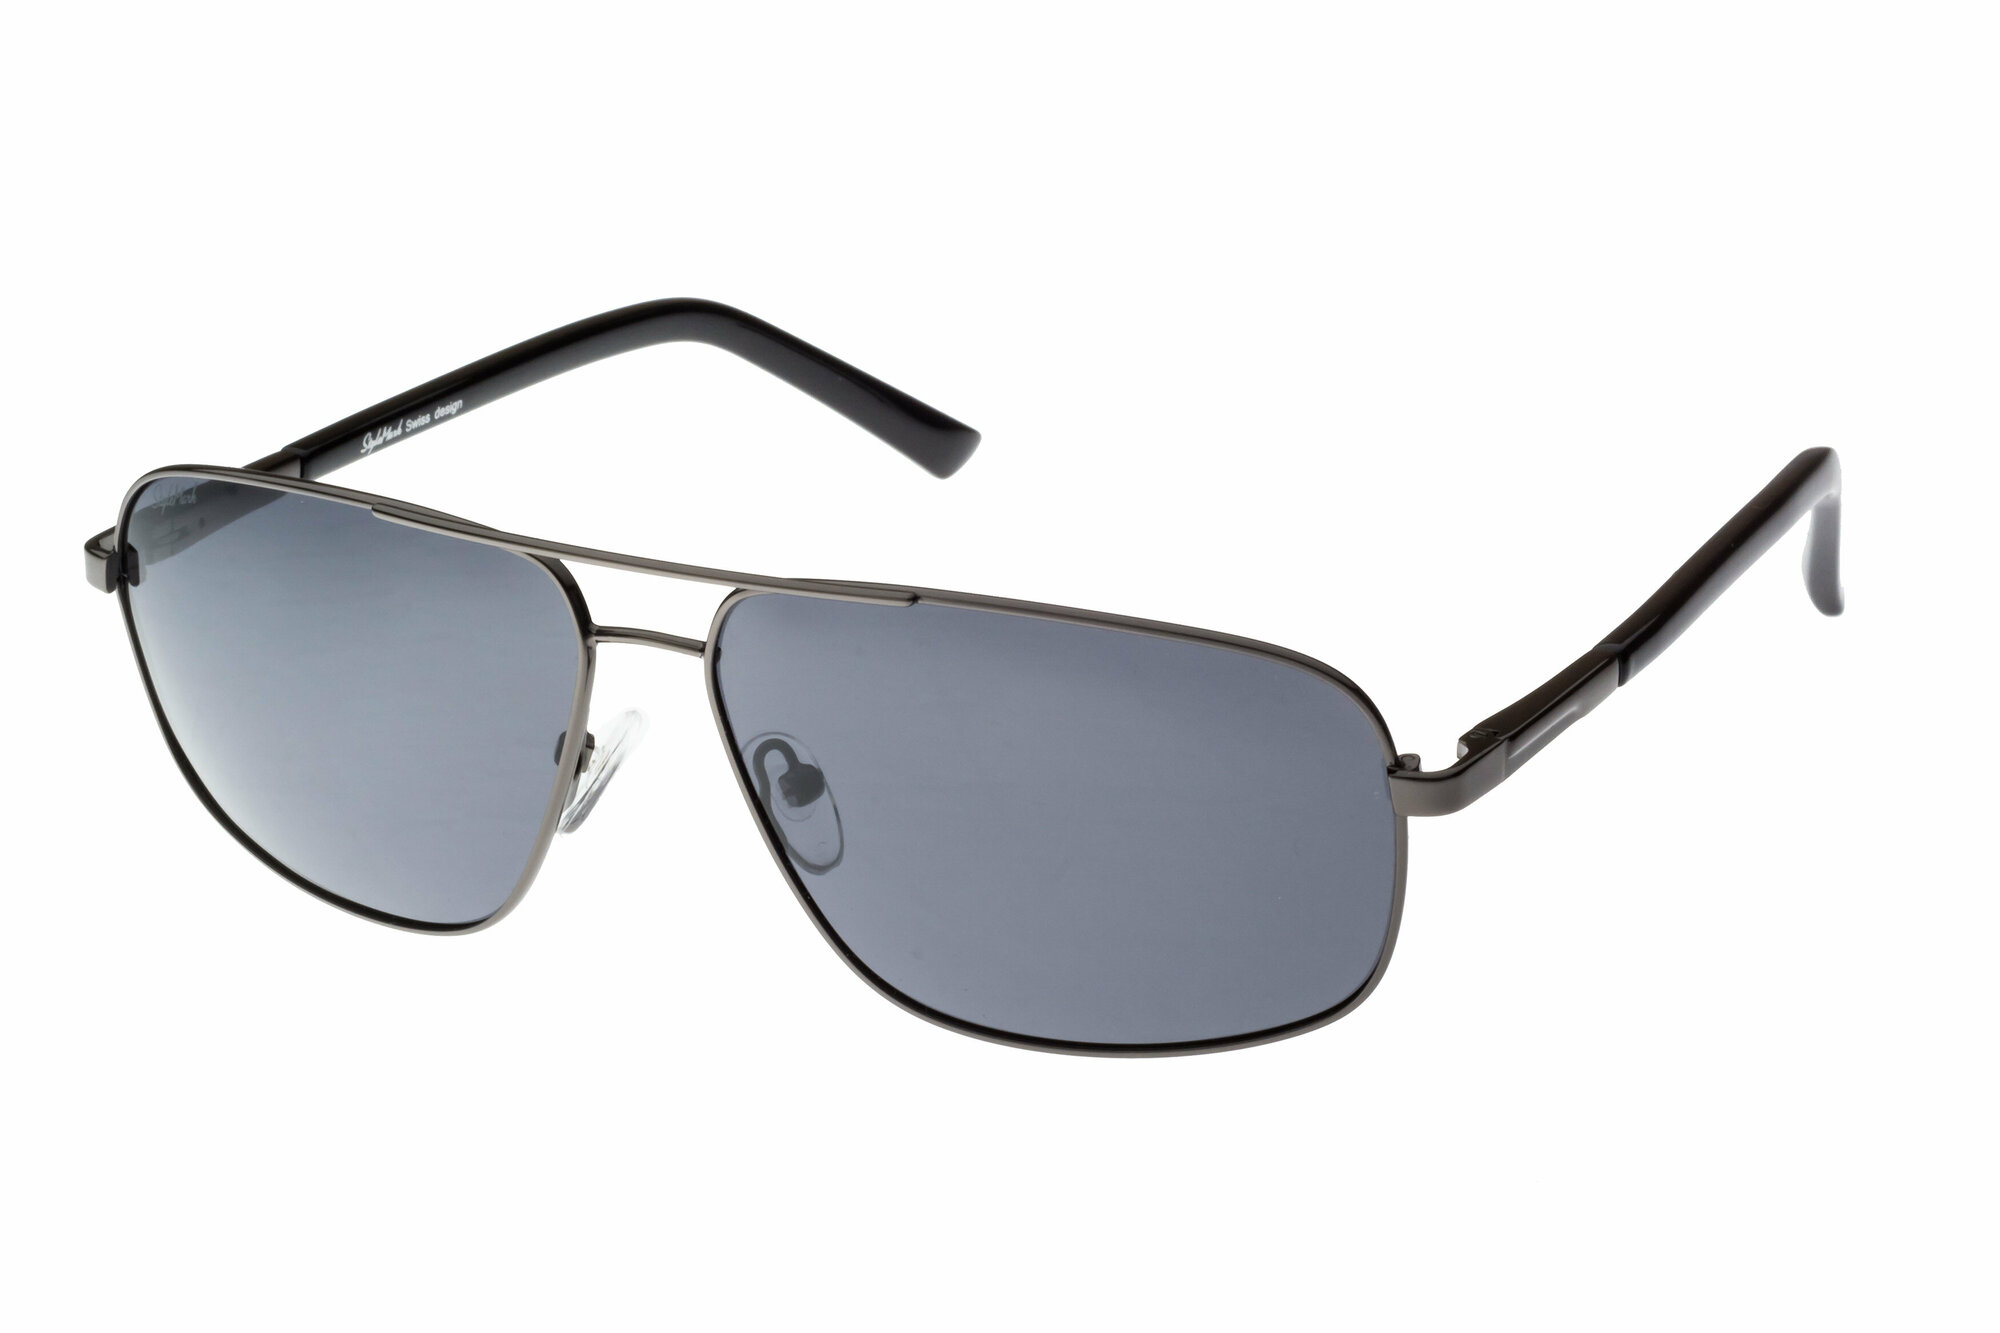 Солнцезащитные очки StyleMark